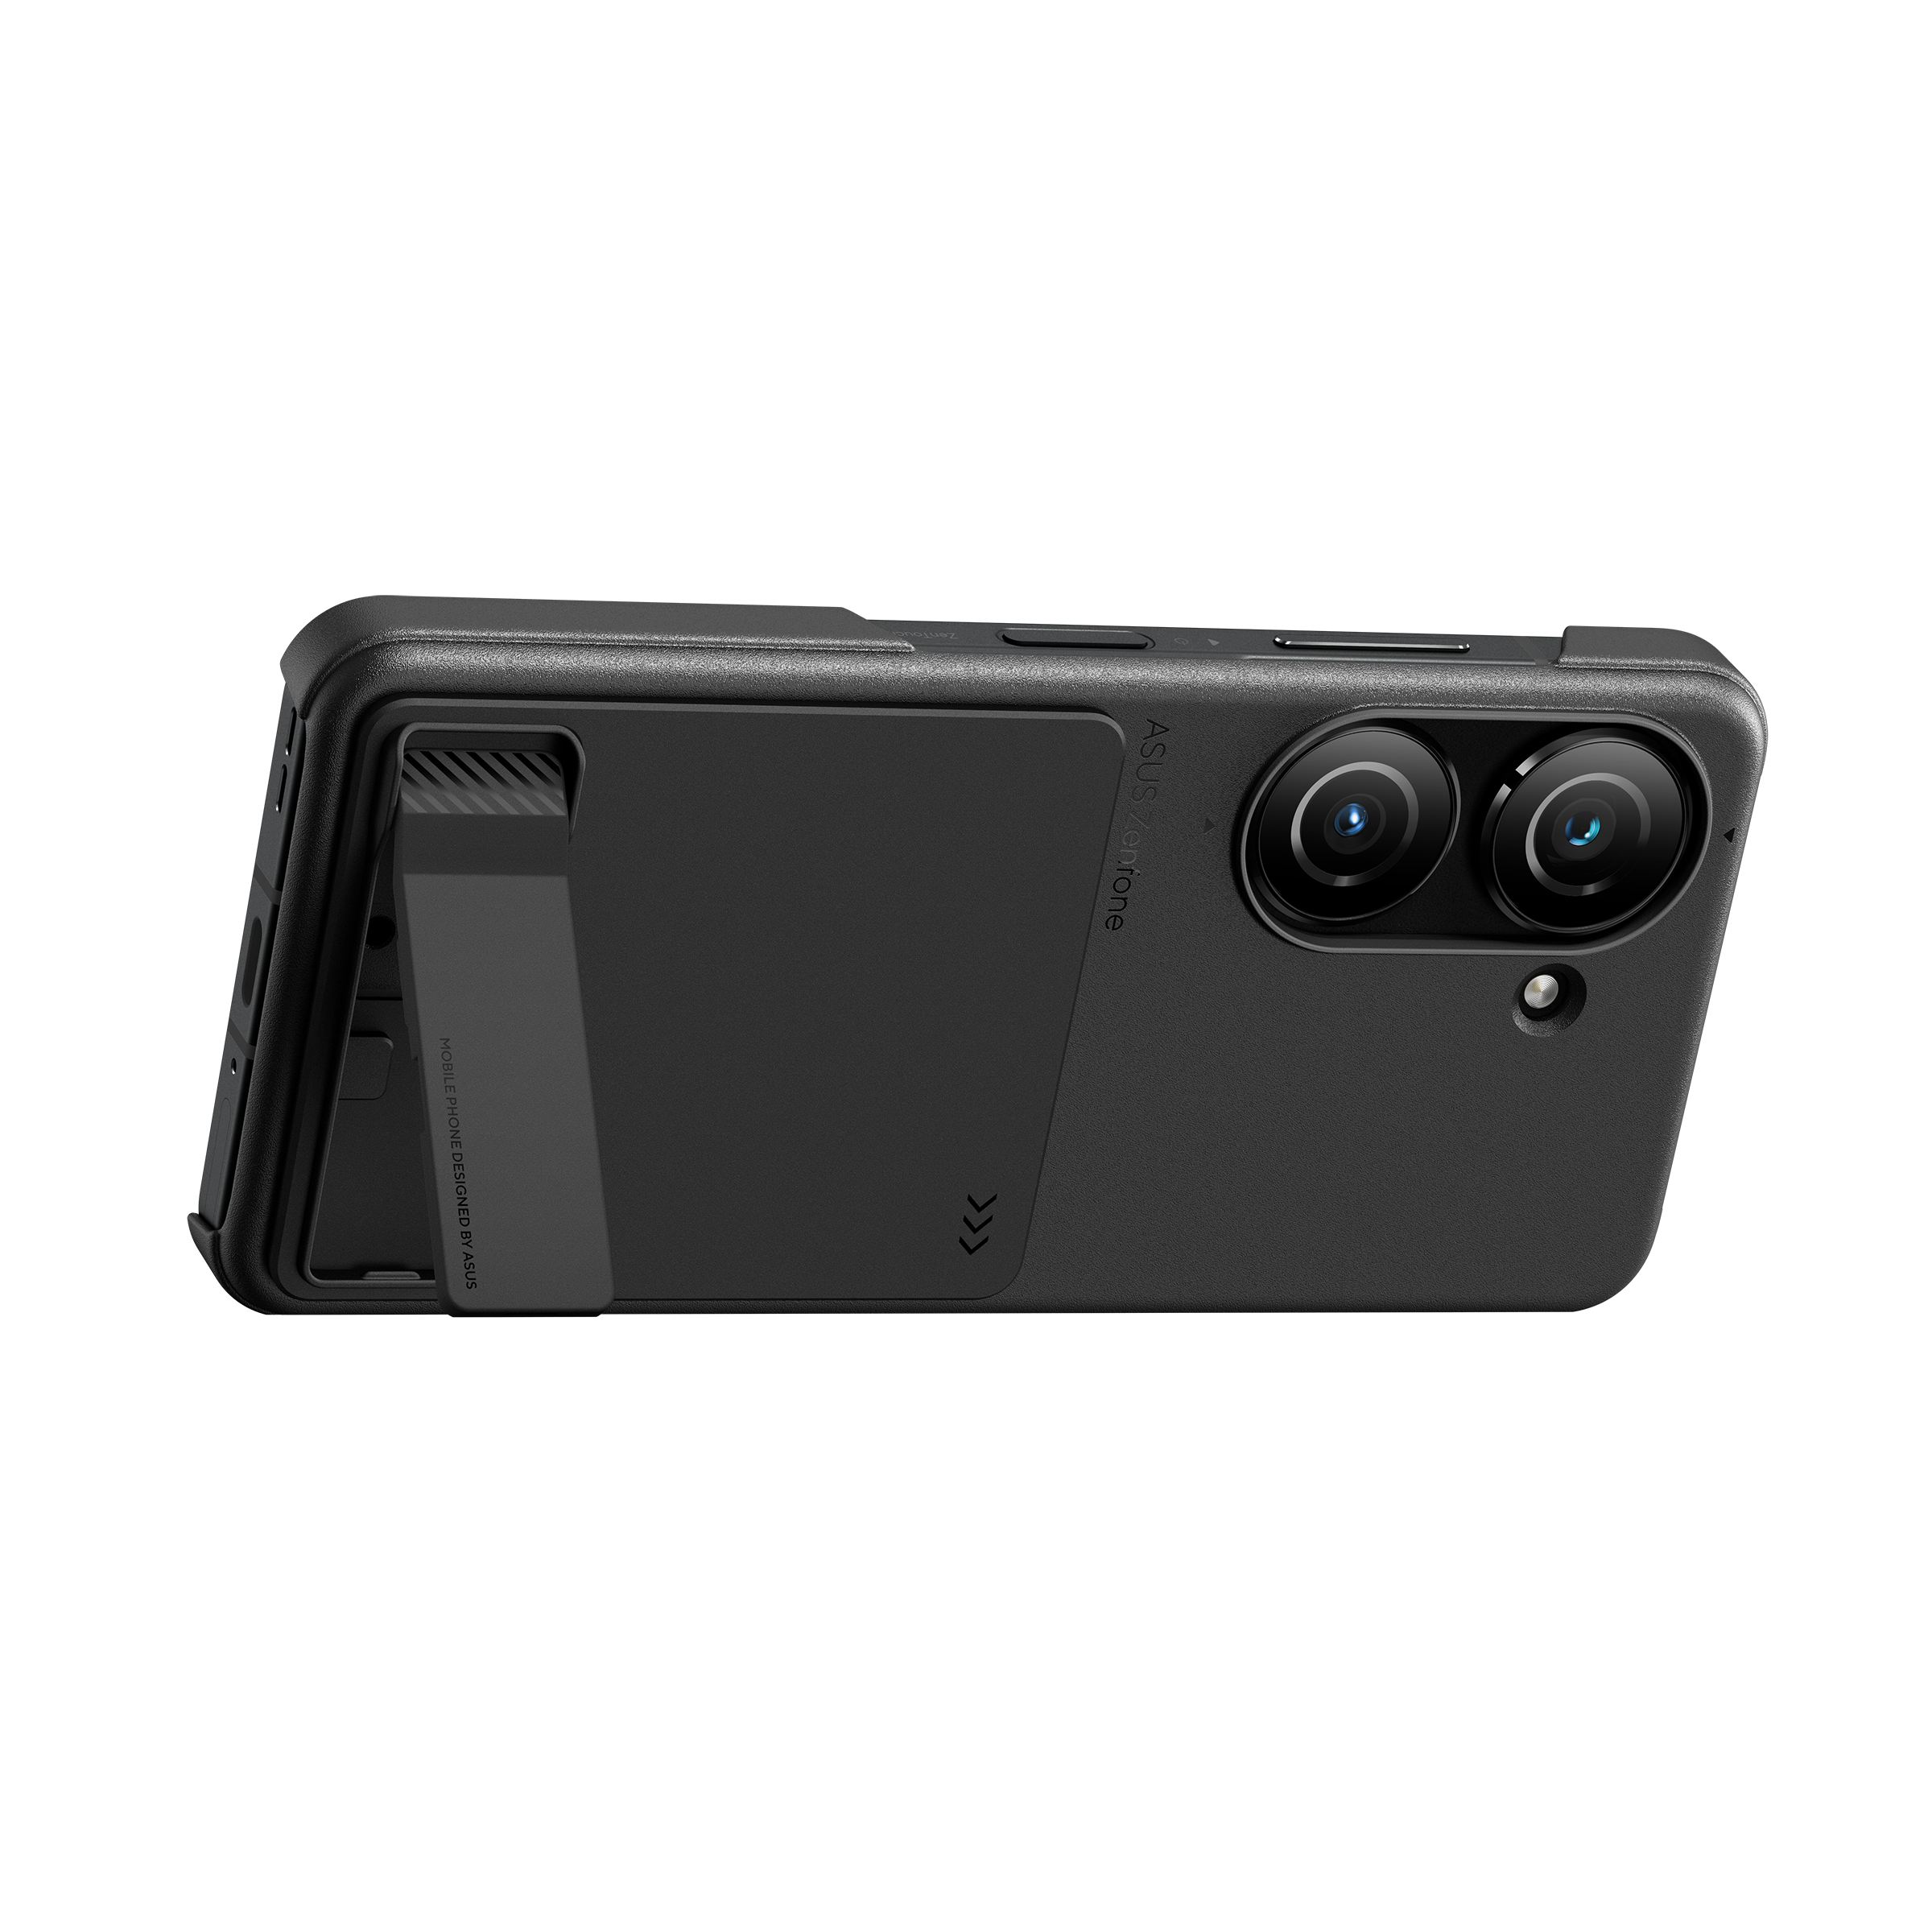 Zenfone 10 Connex Accessories Set